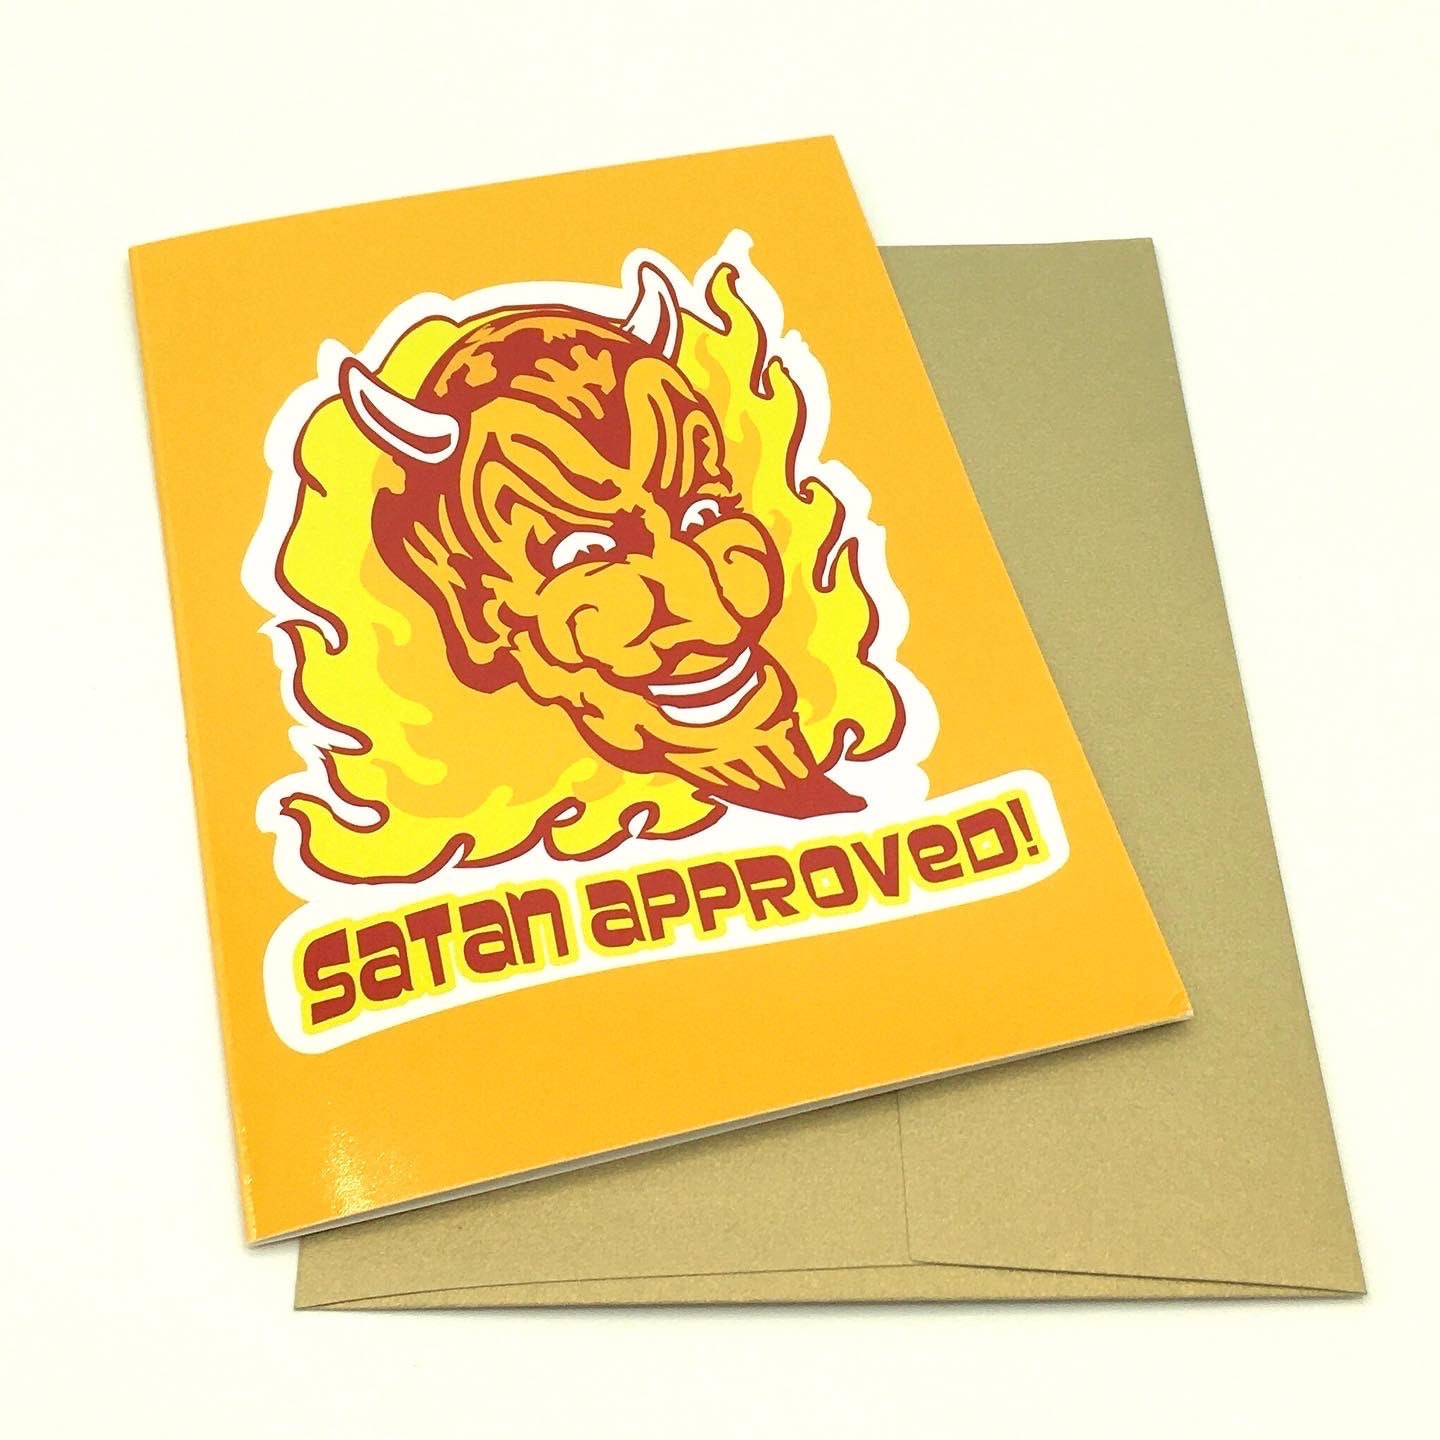 Satan Approved! Greeting Card